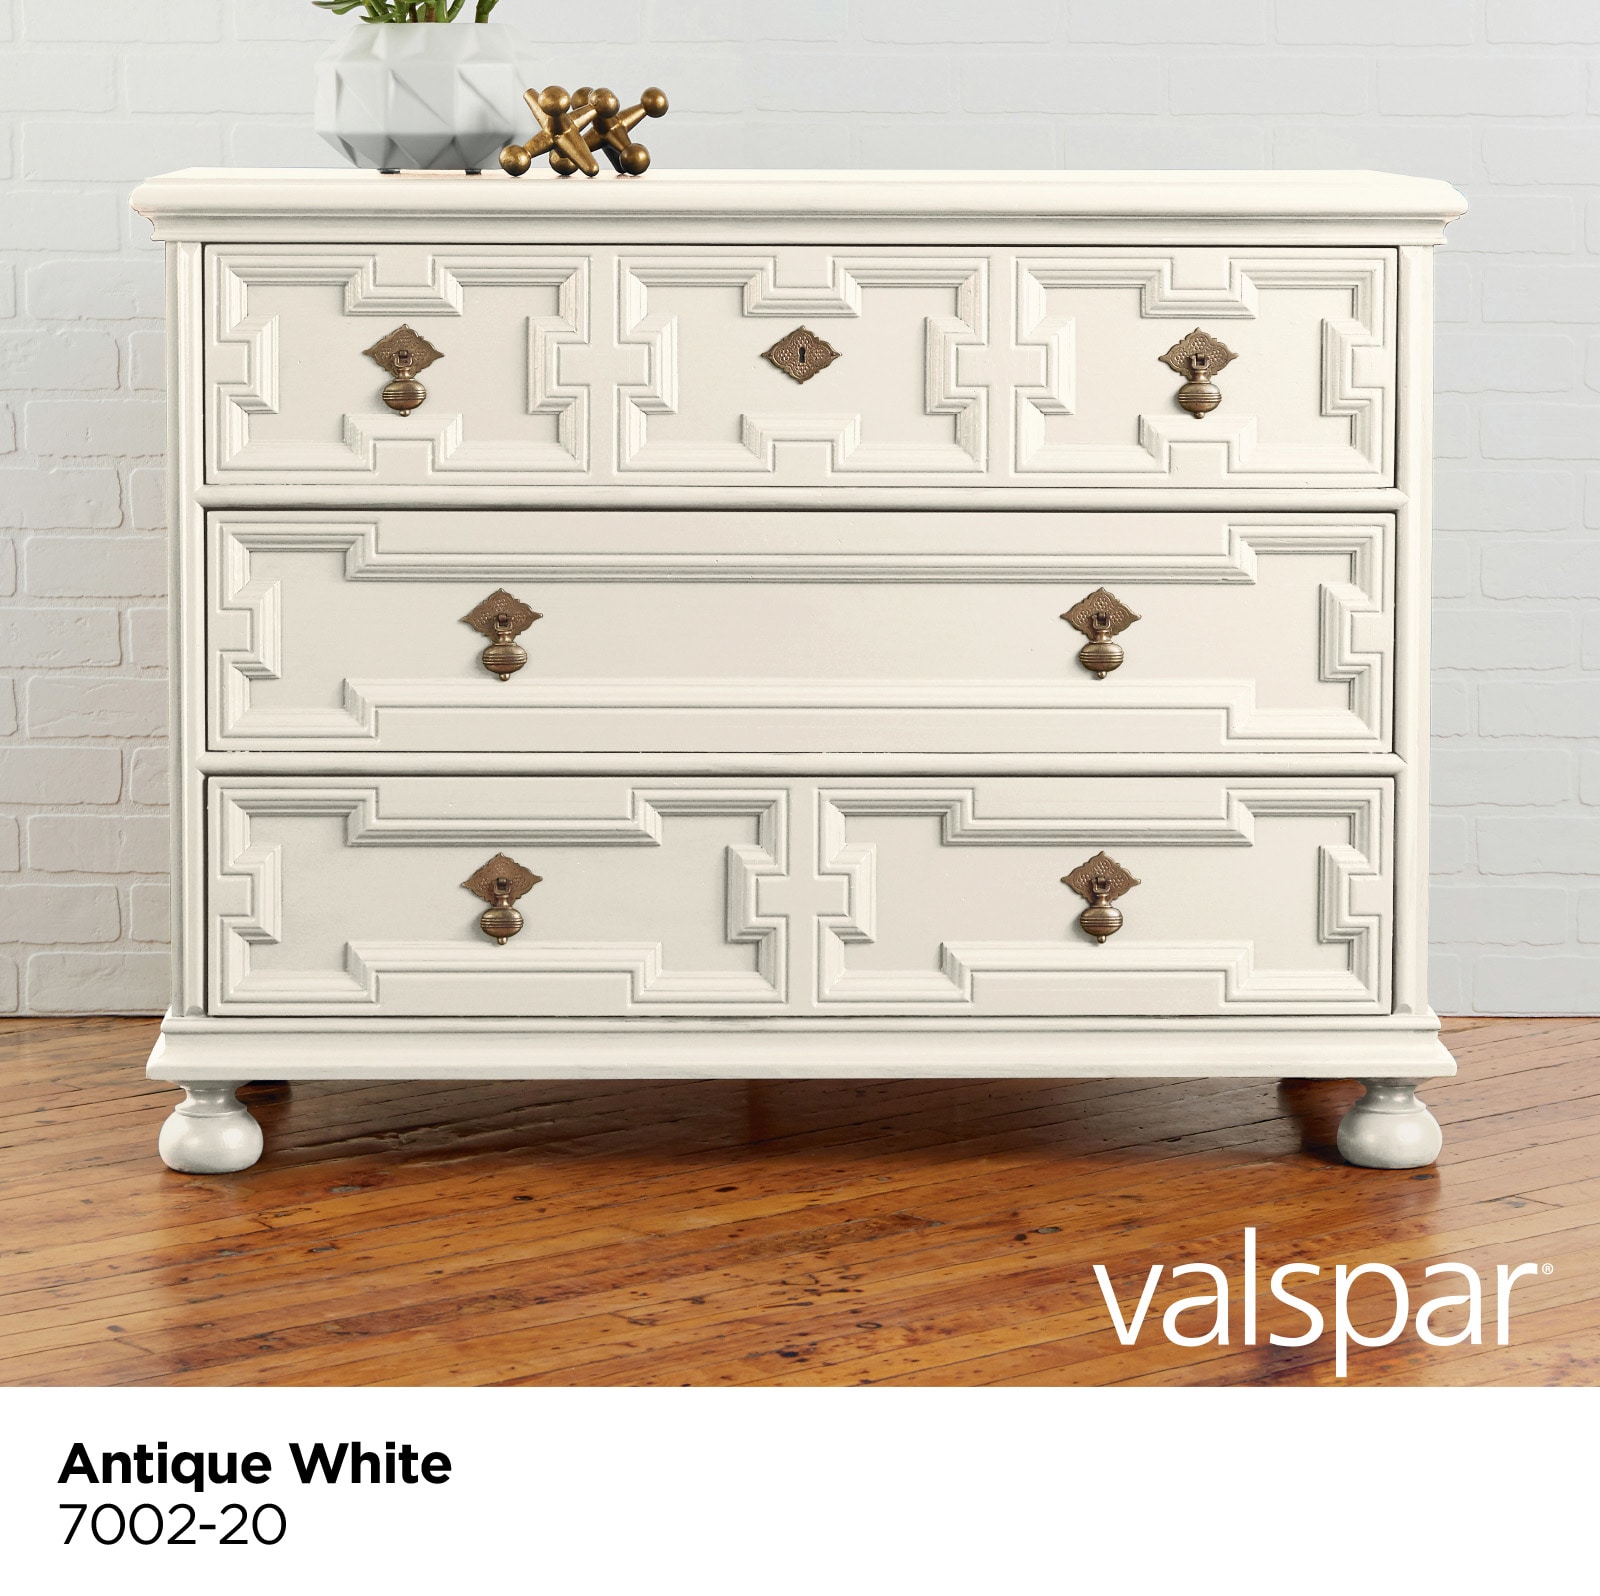 Valspar Satin Antique White 7002-20 Cabinet and Furniture Paint